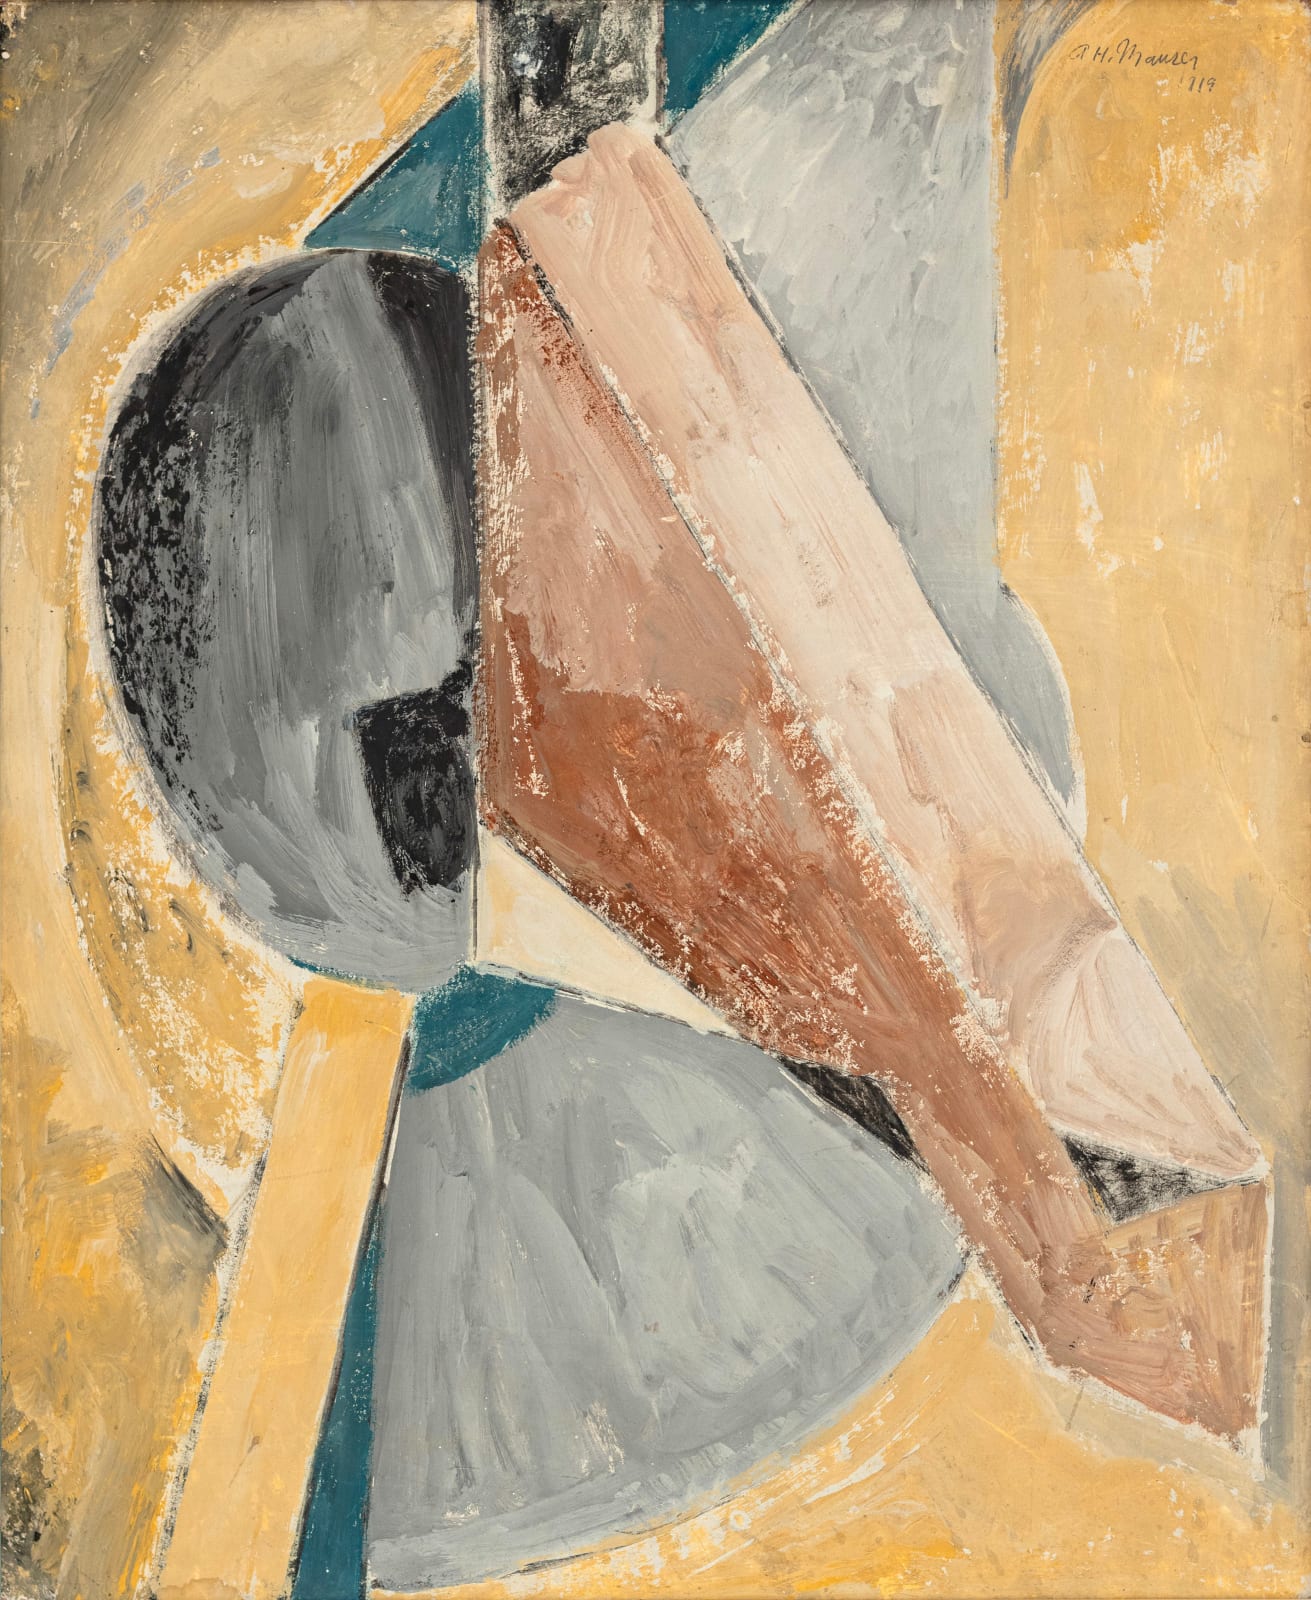 Alfred Maurer, Abstraction, 1919, 1919